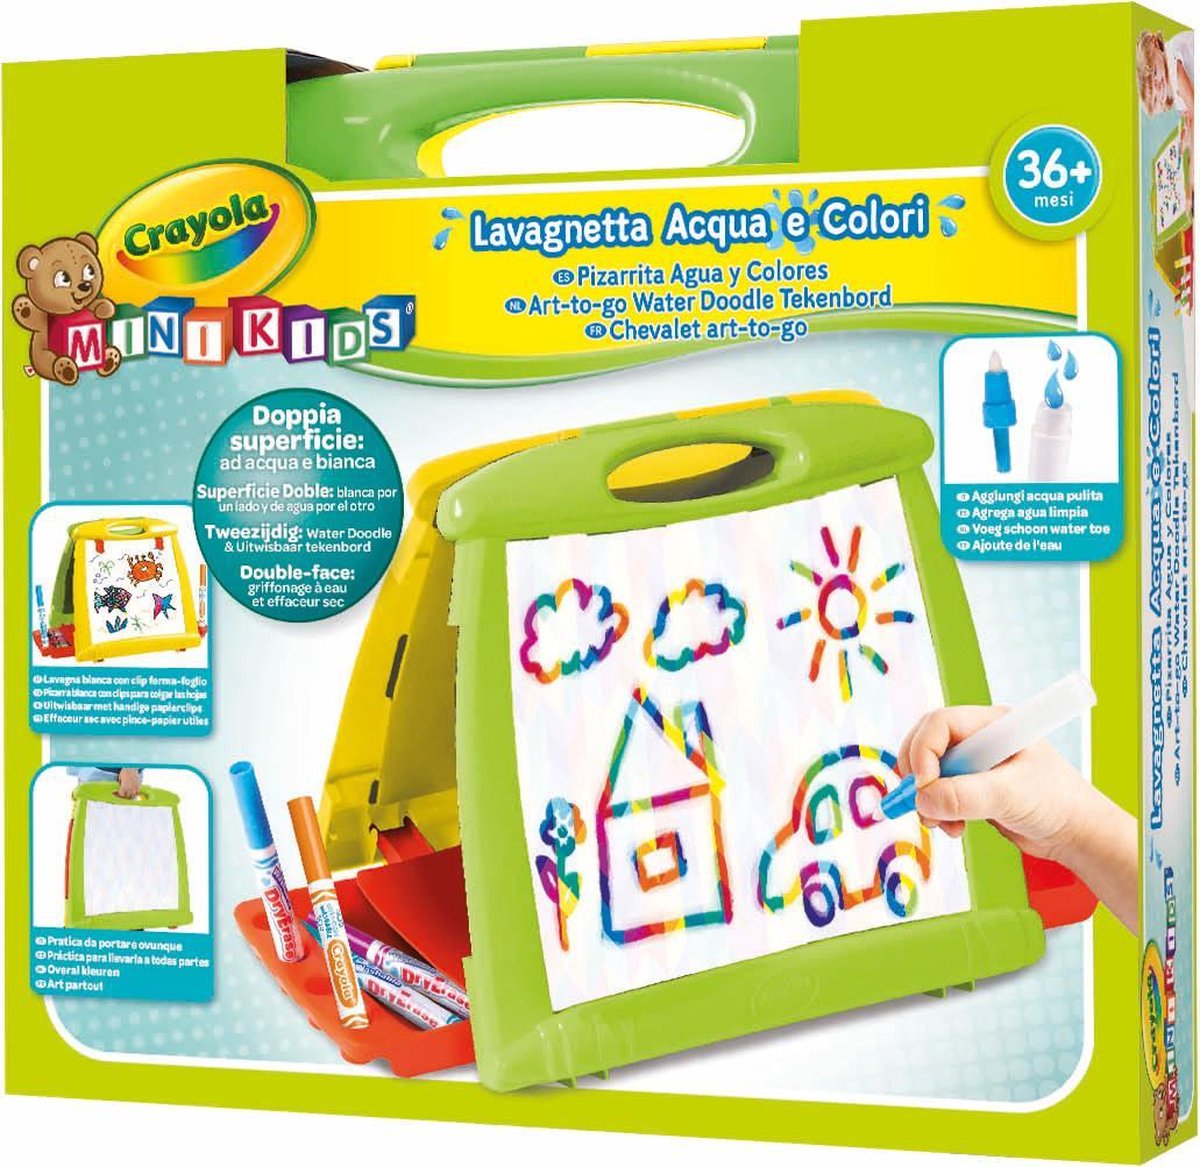 Crayola Mini Kids - Water Doodle tekenbord